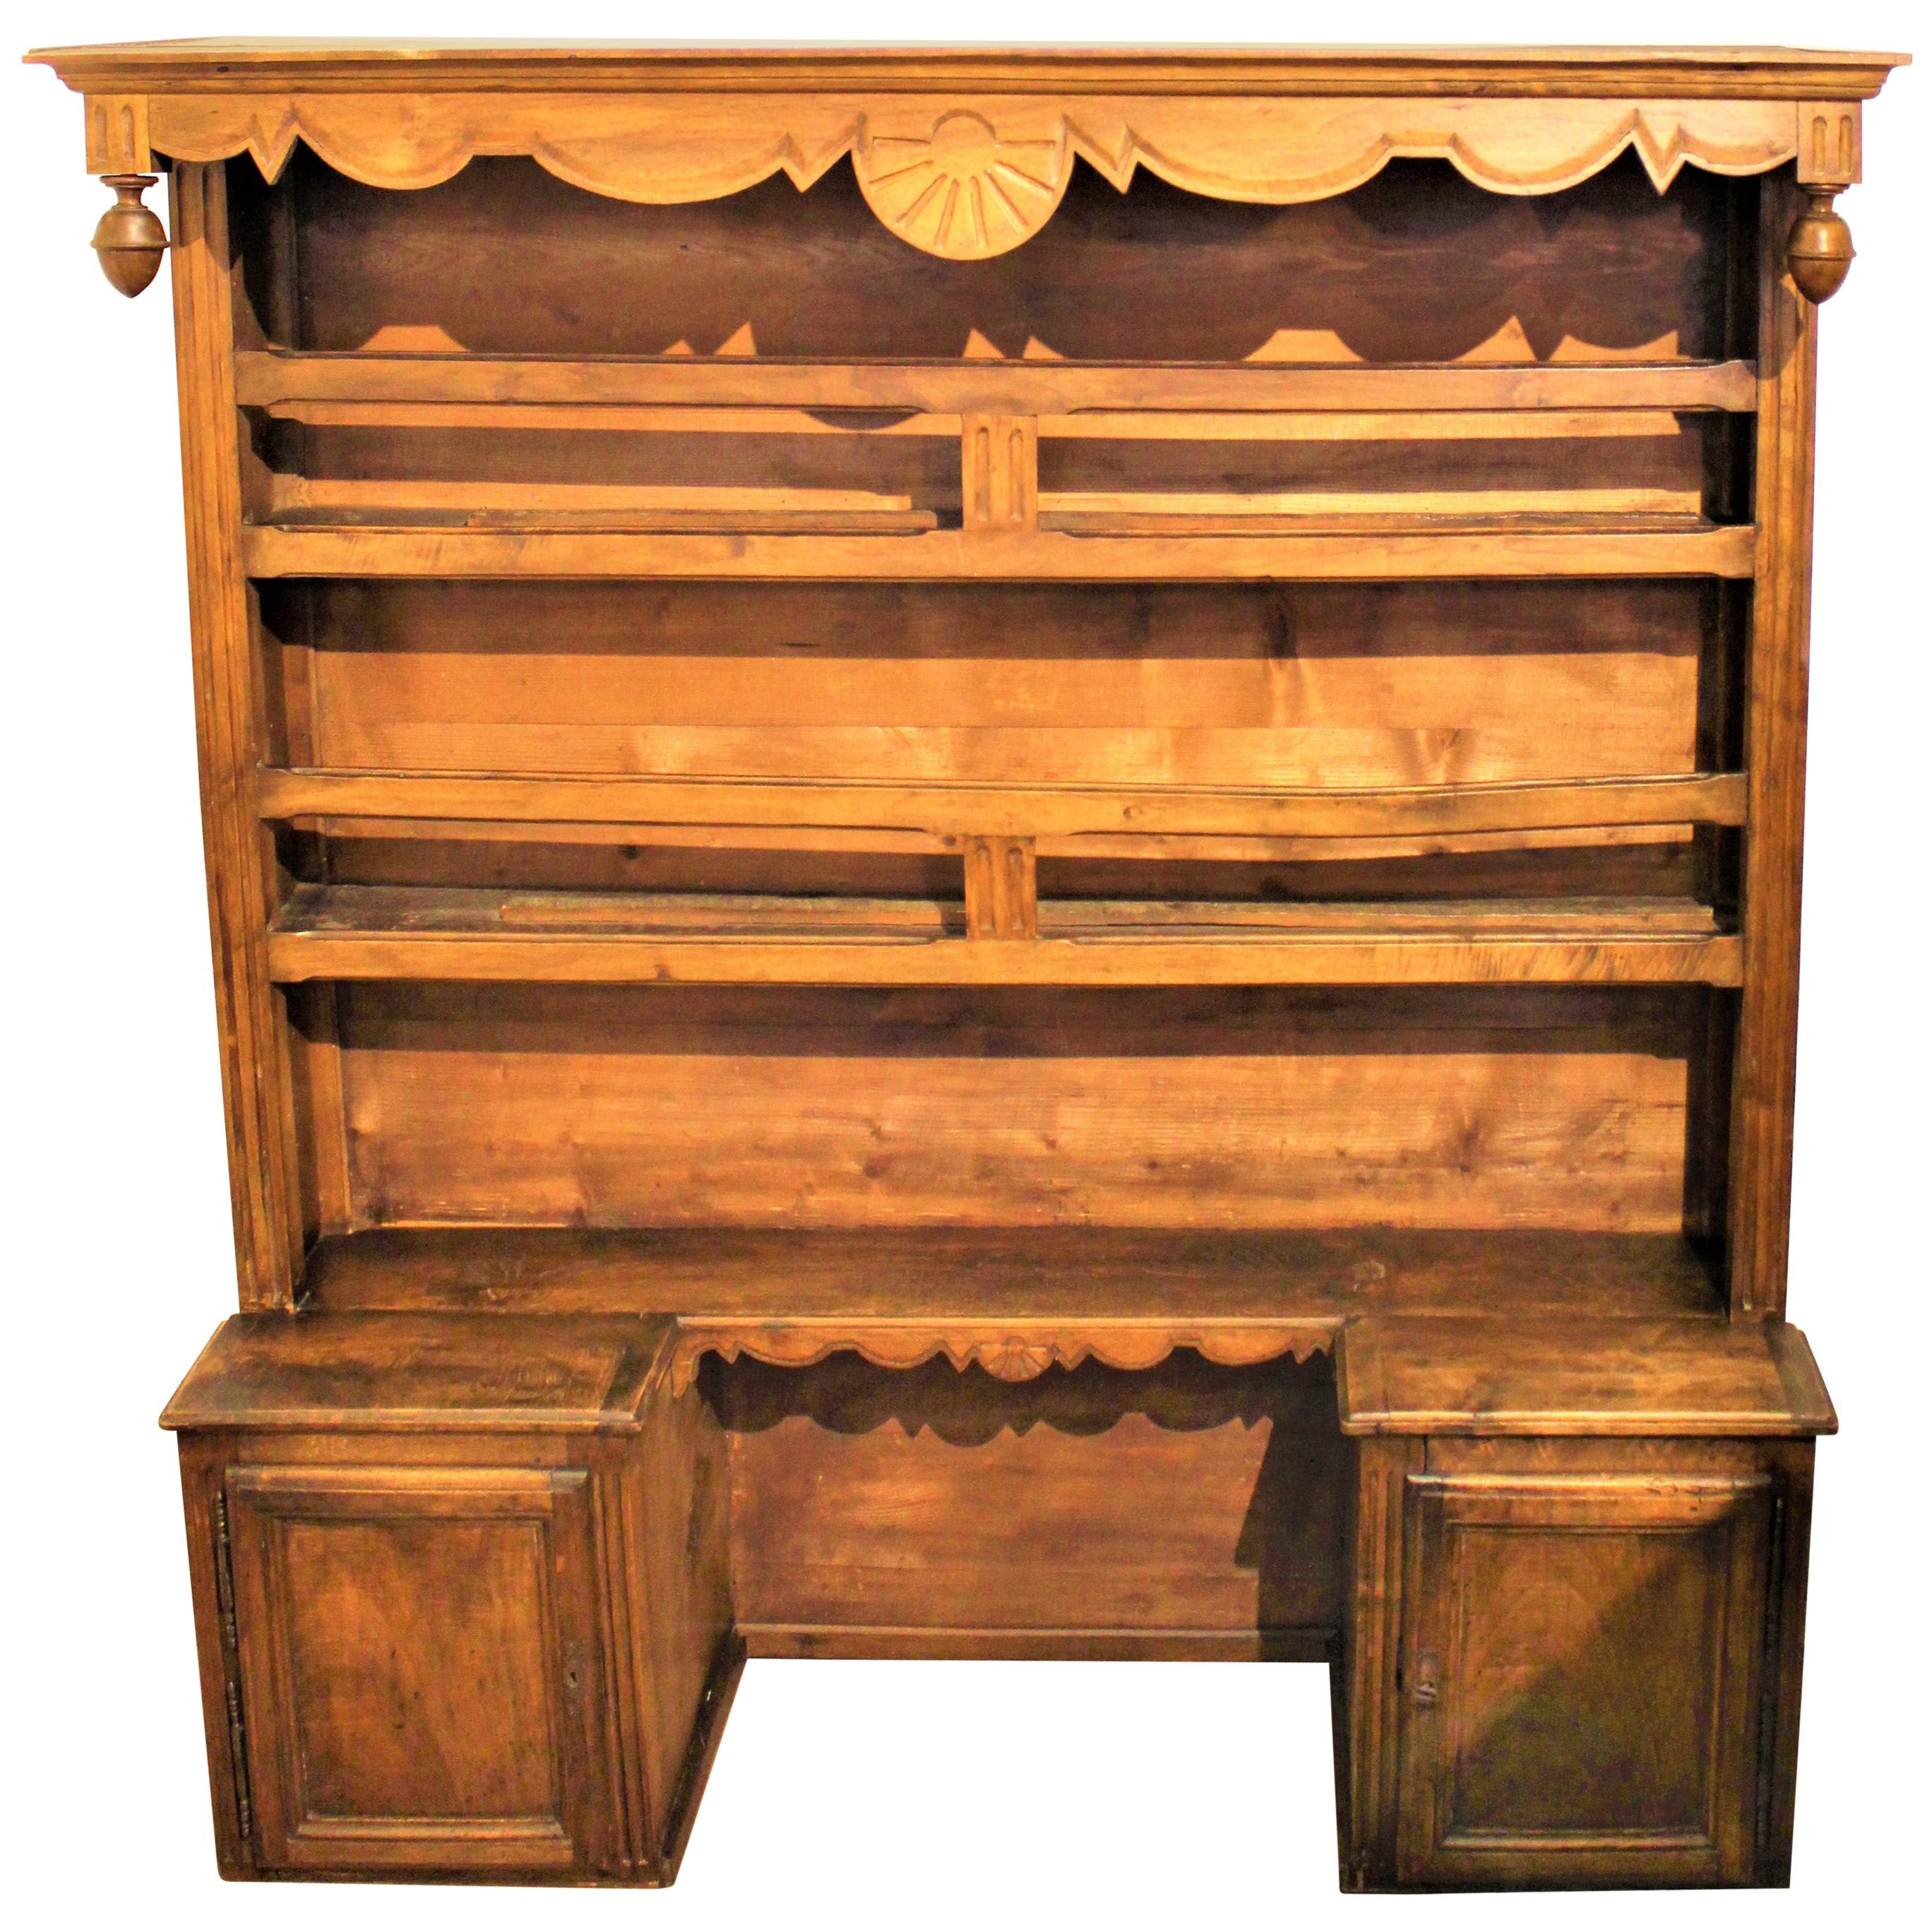 Antique French Walnut Rustic Chamfer Plate Holder Buffet Dresser Rack Top Shelf For Sale